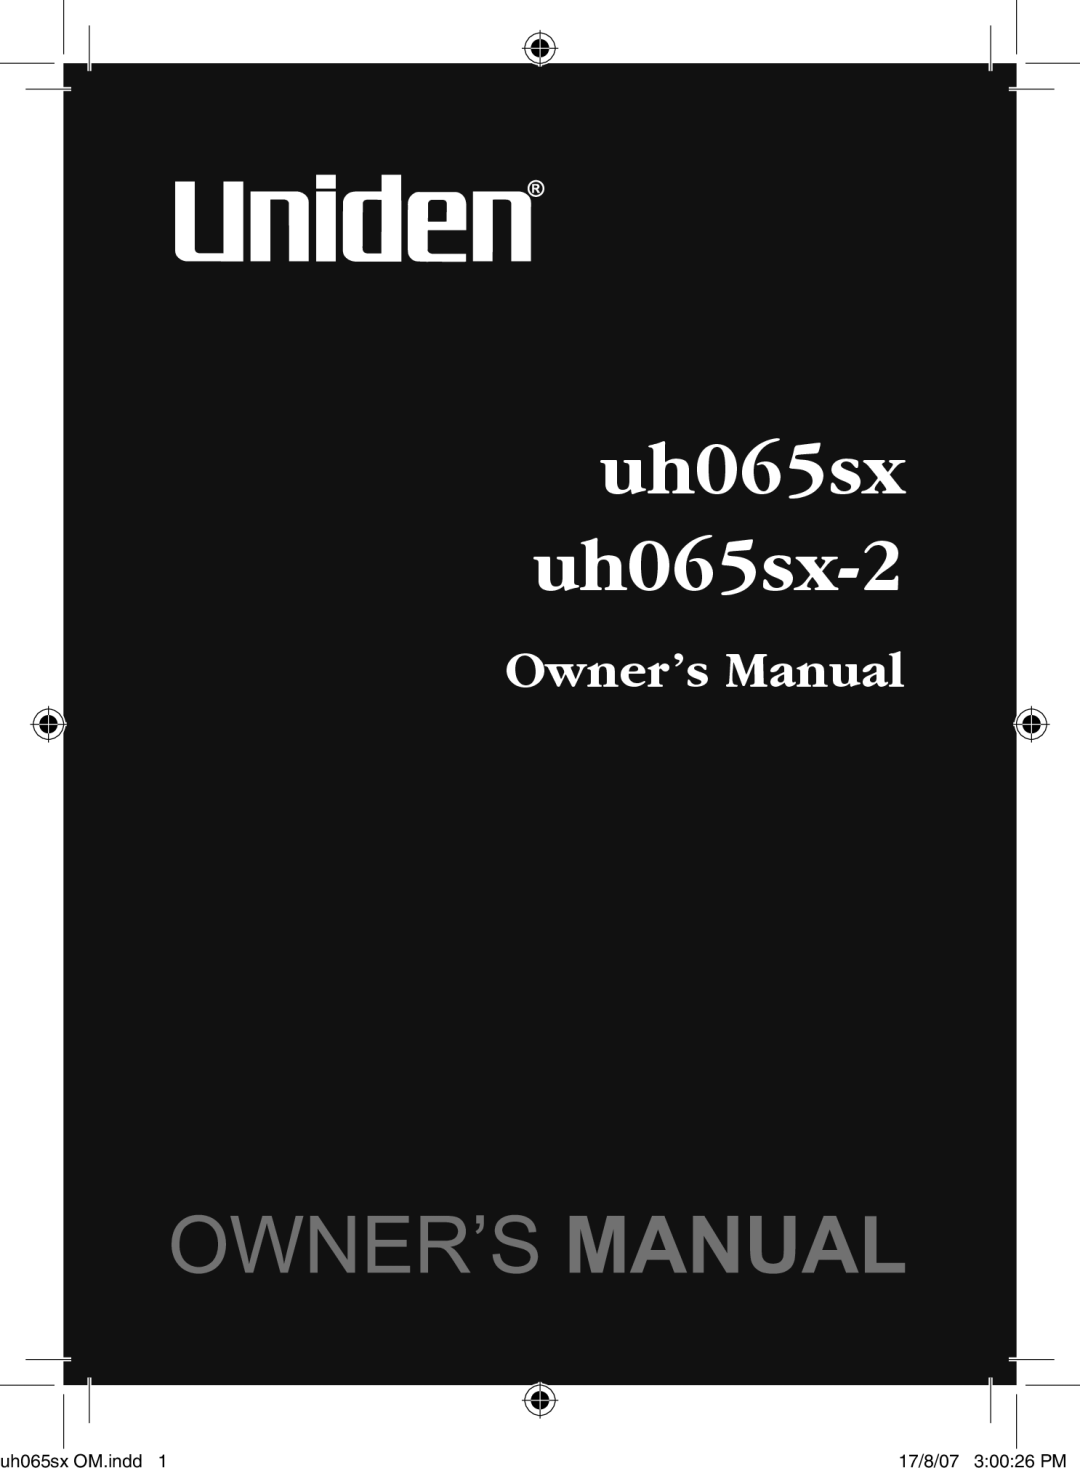 Uniden owner manual Uh065sx uh065sx-2 